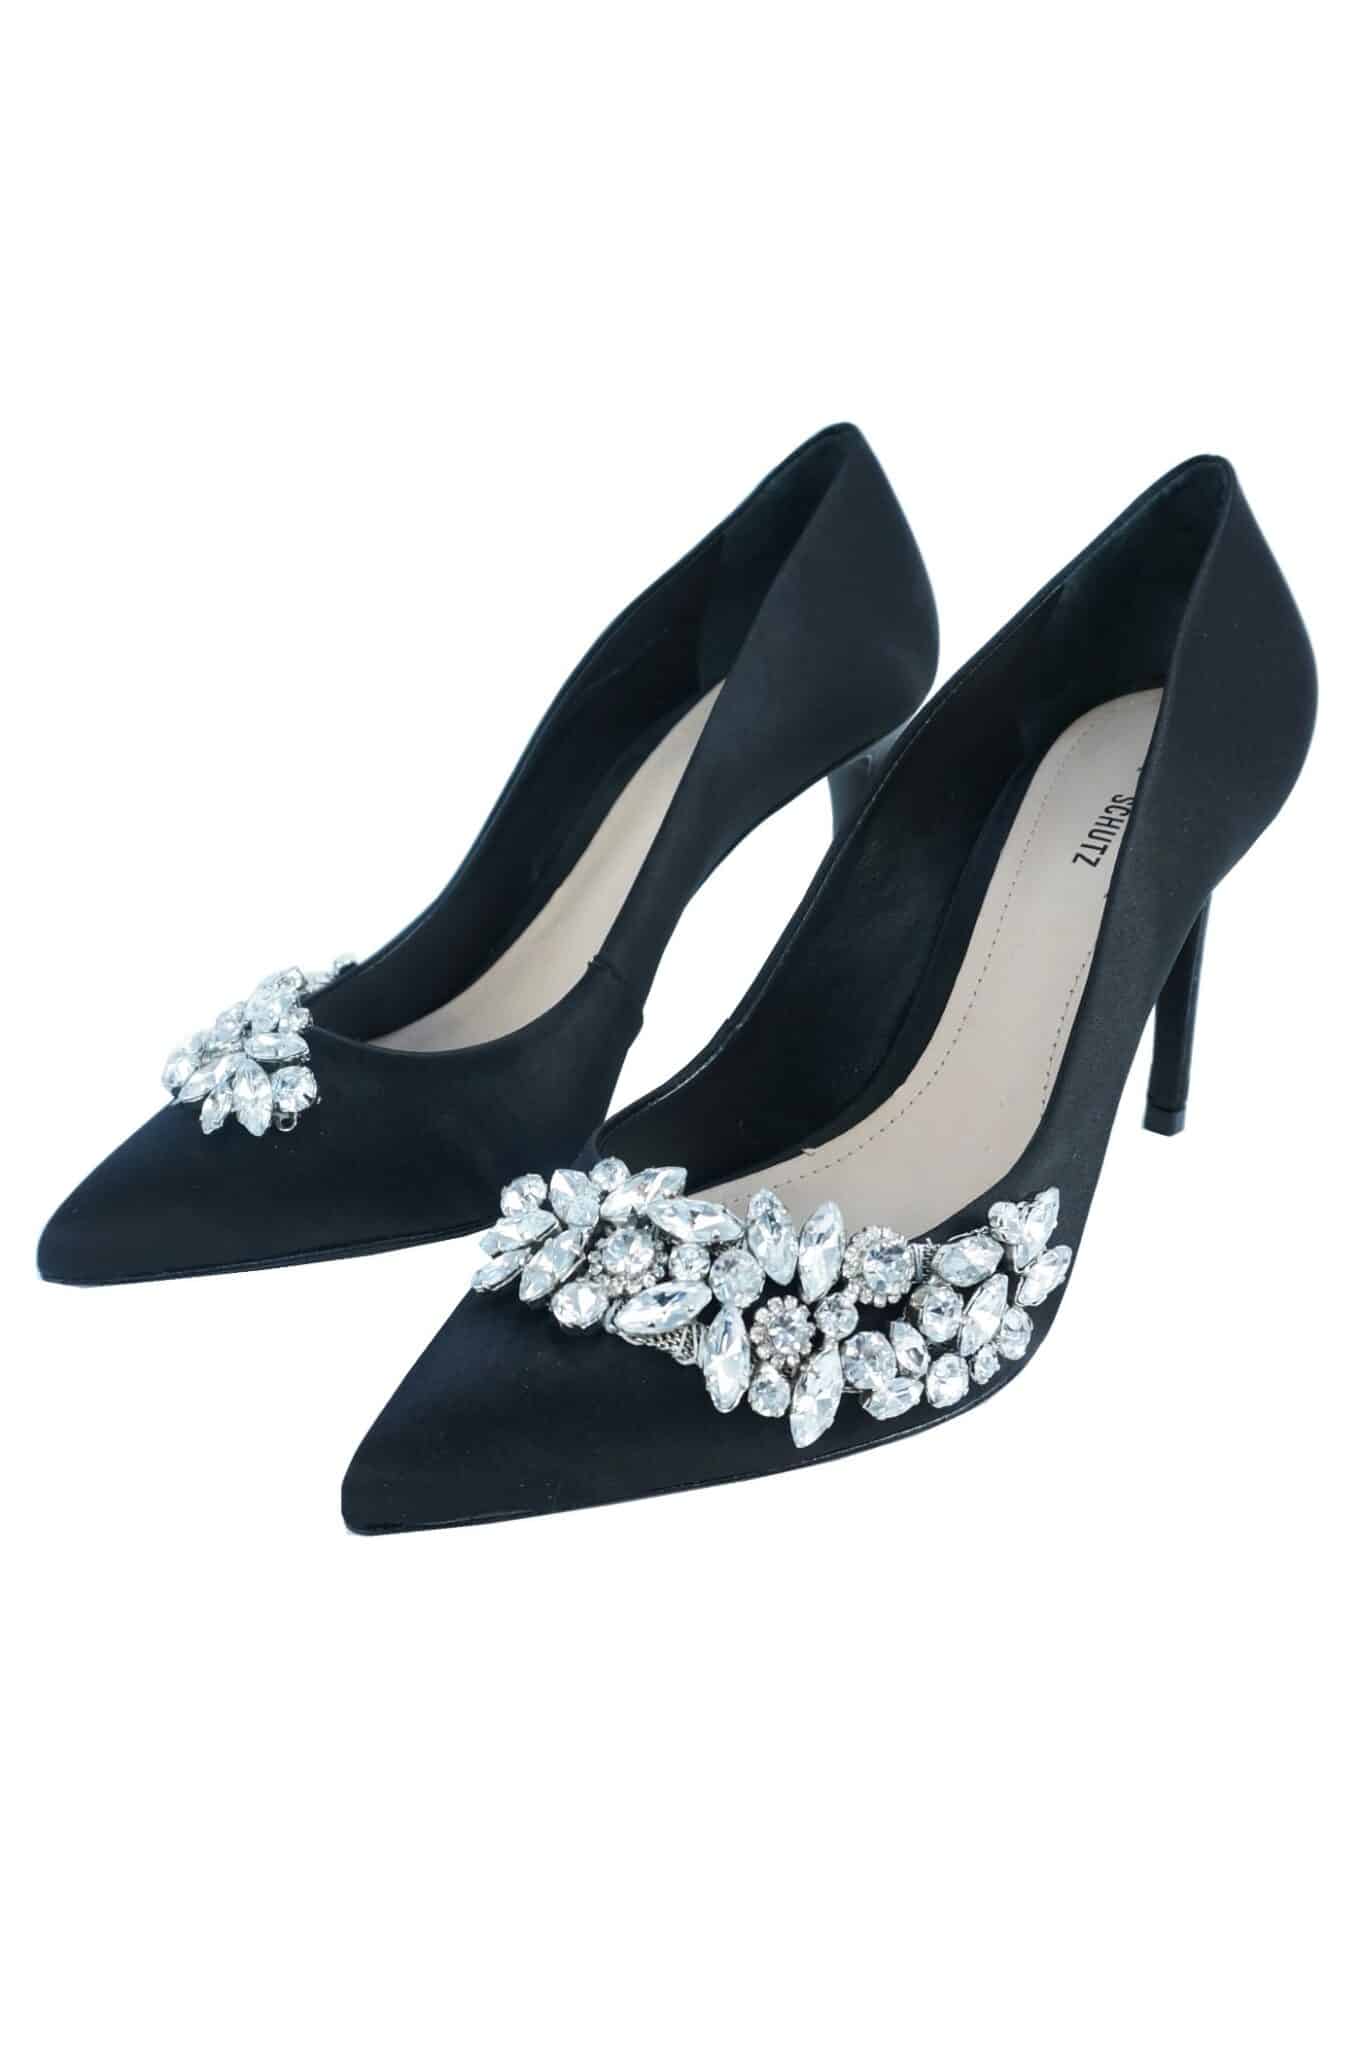 Black satin and crystal embellished stiletto heels - SCHUTZ